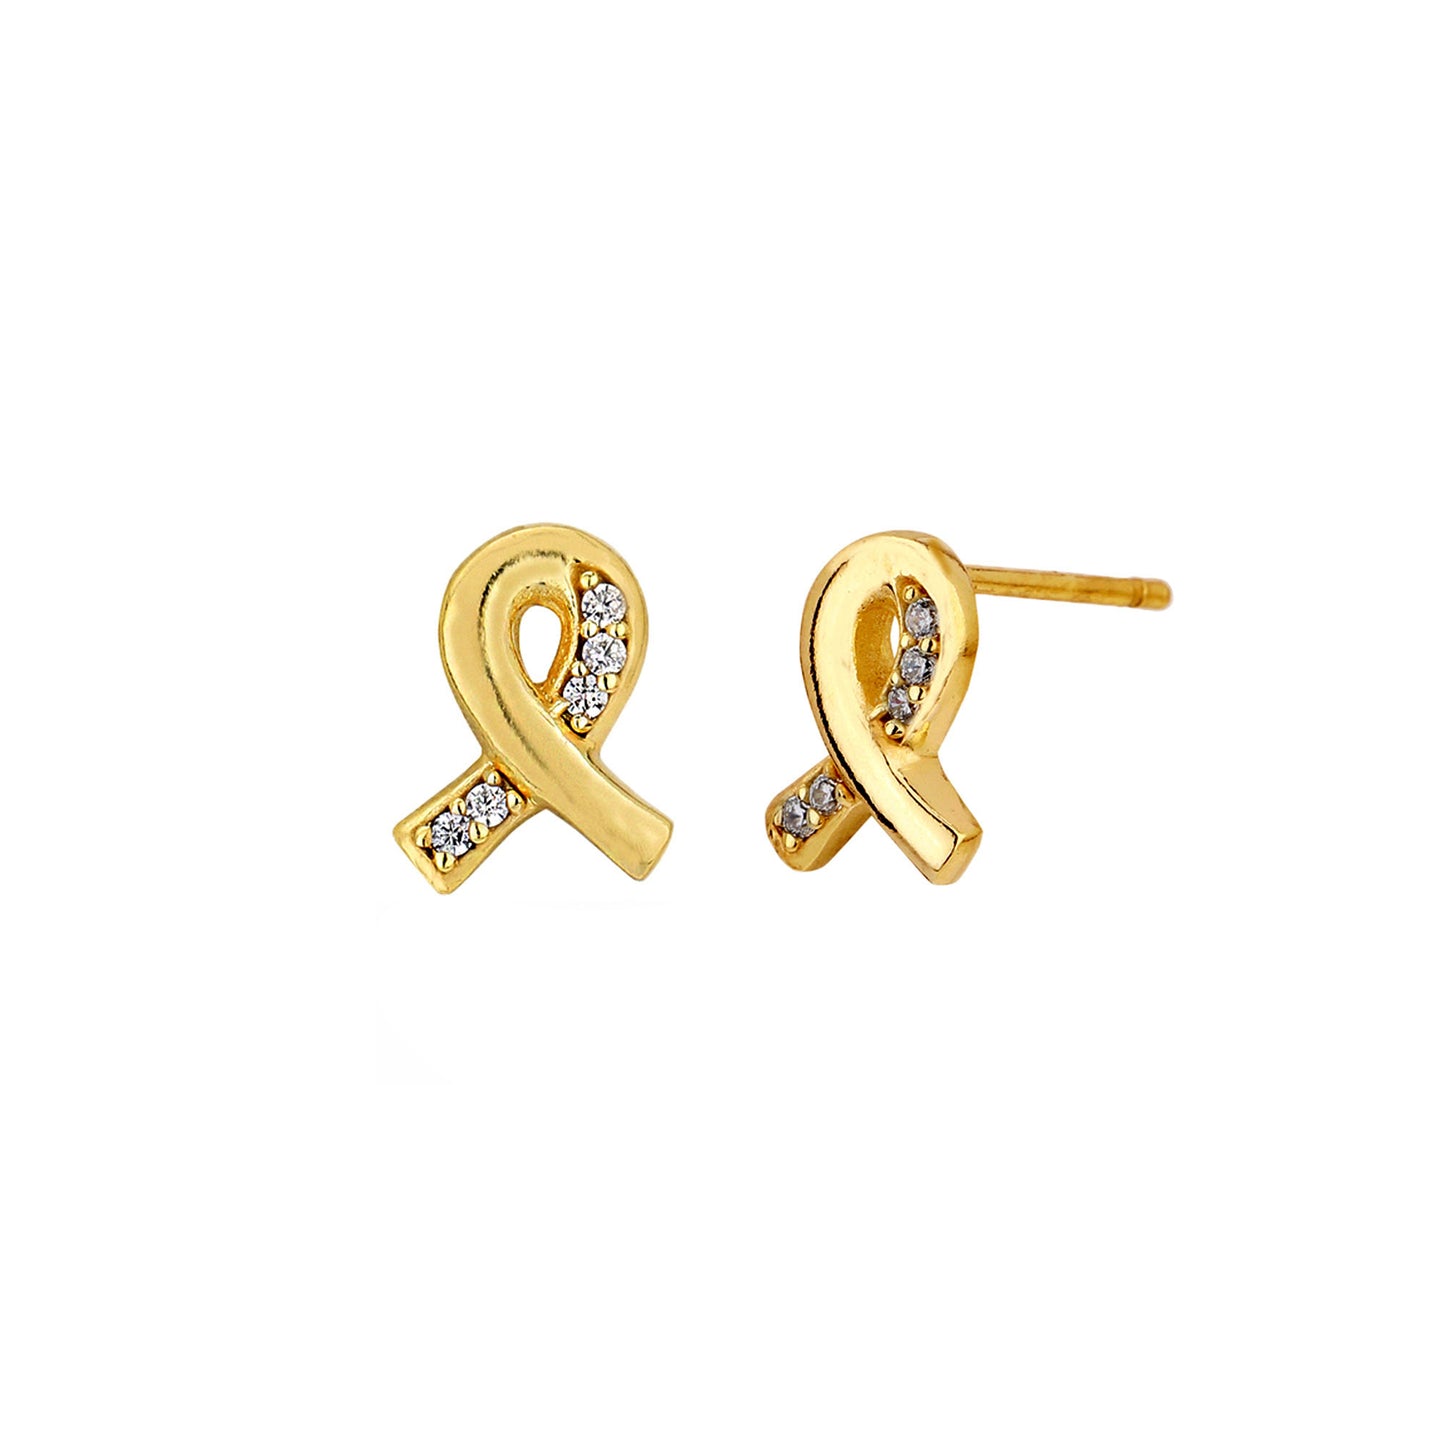 Carlton London Flash Gold Cross Stud Earrings